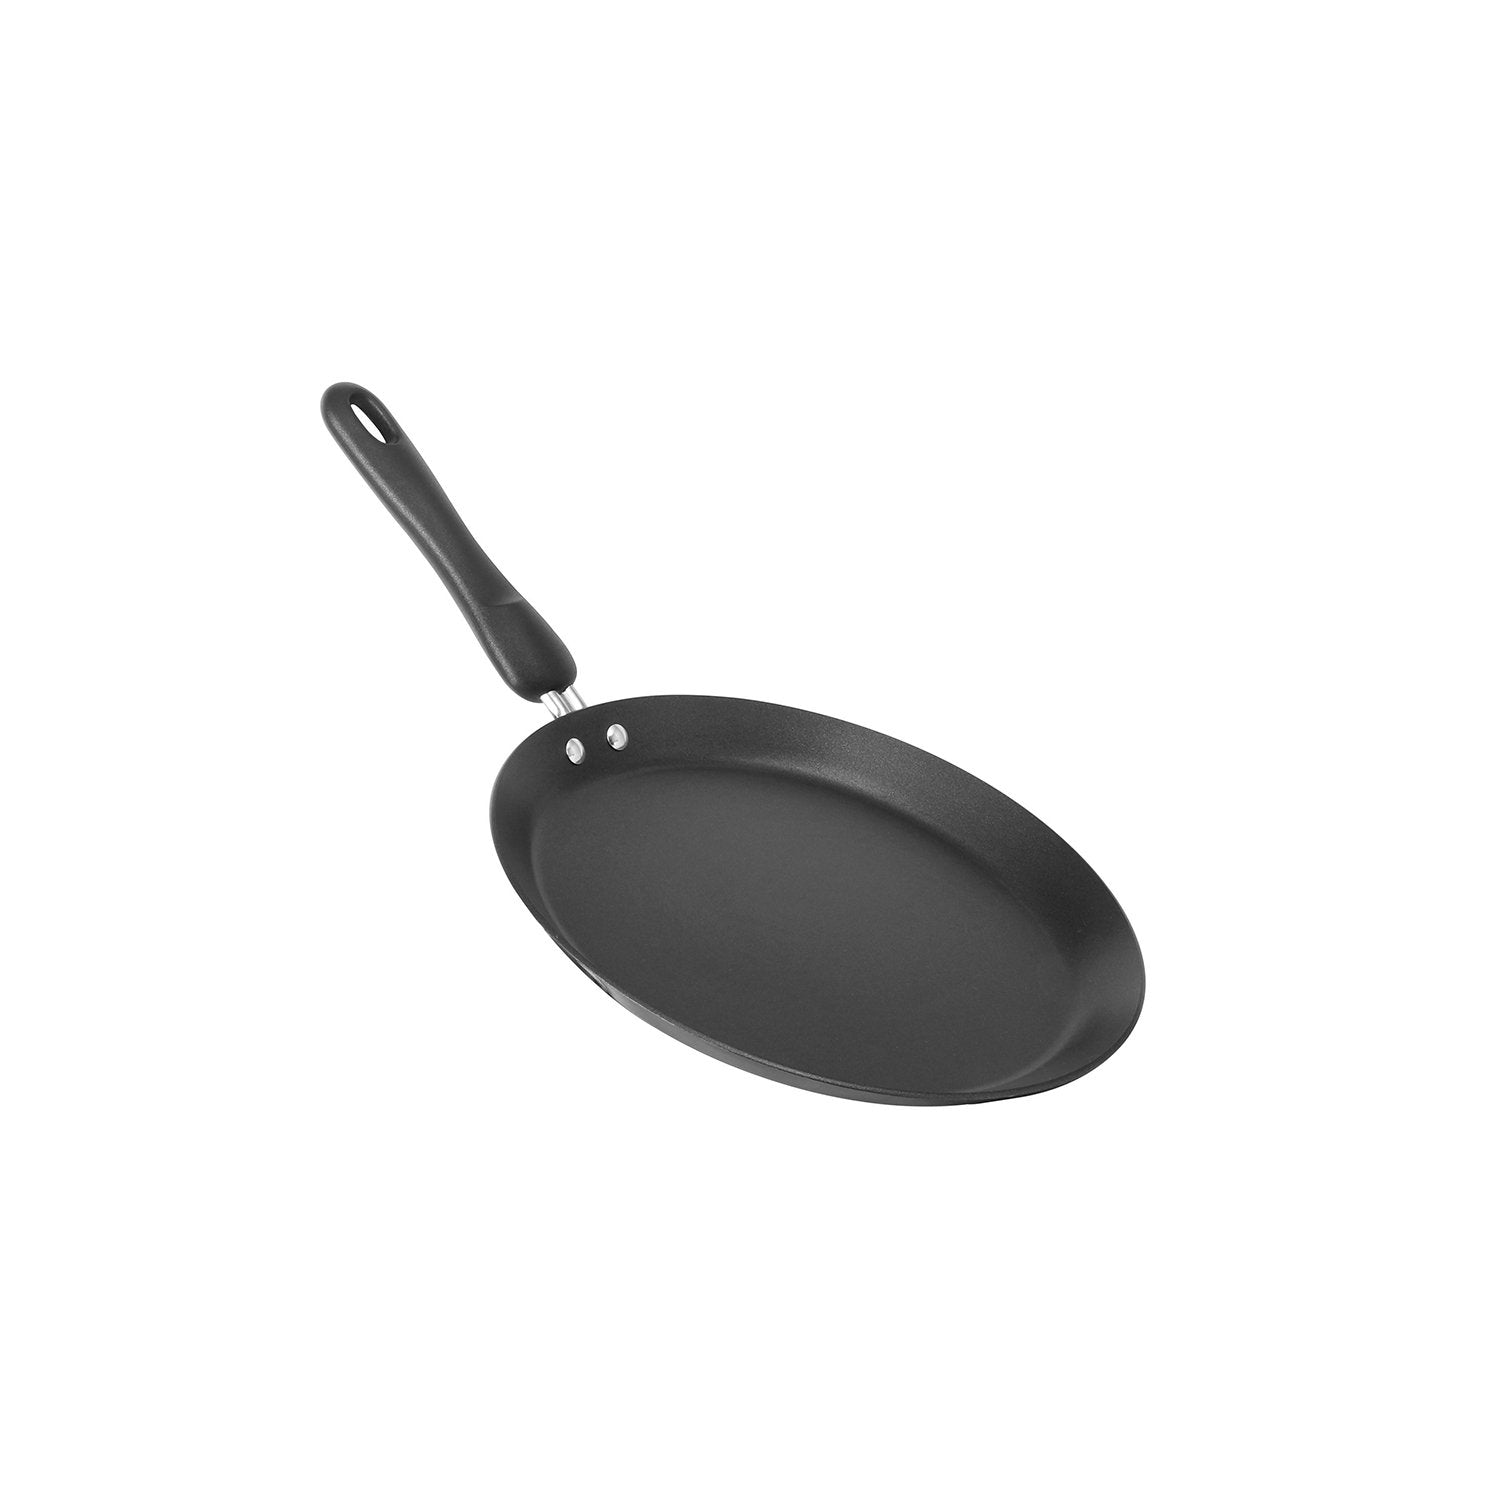 Meyer Non-Stick 2-Piece Cookware Set, Kadai + Flat Dosa Tawa (Suitable For Gas & Electric Cooktops) - Pots and Pans